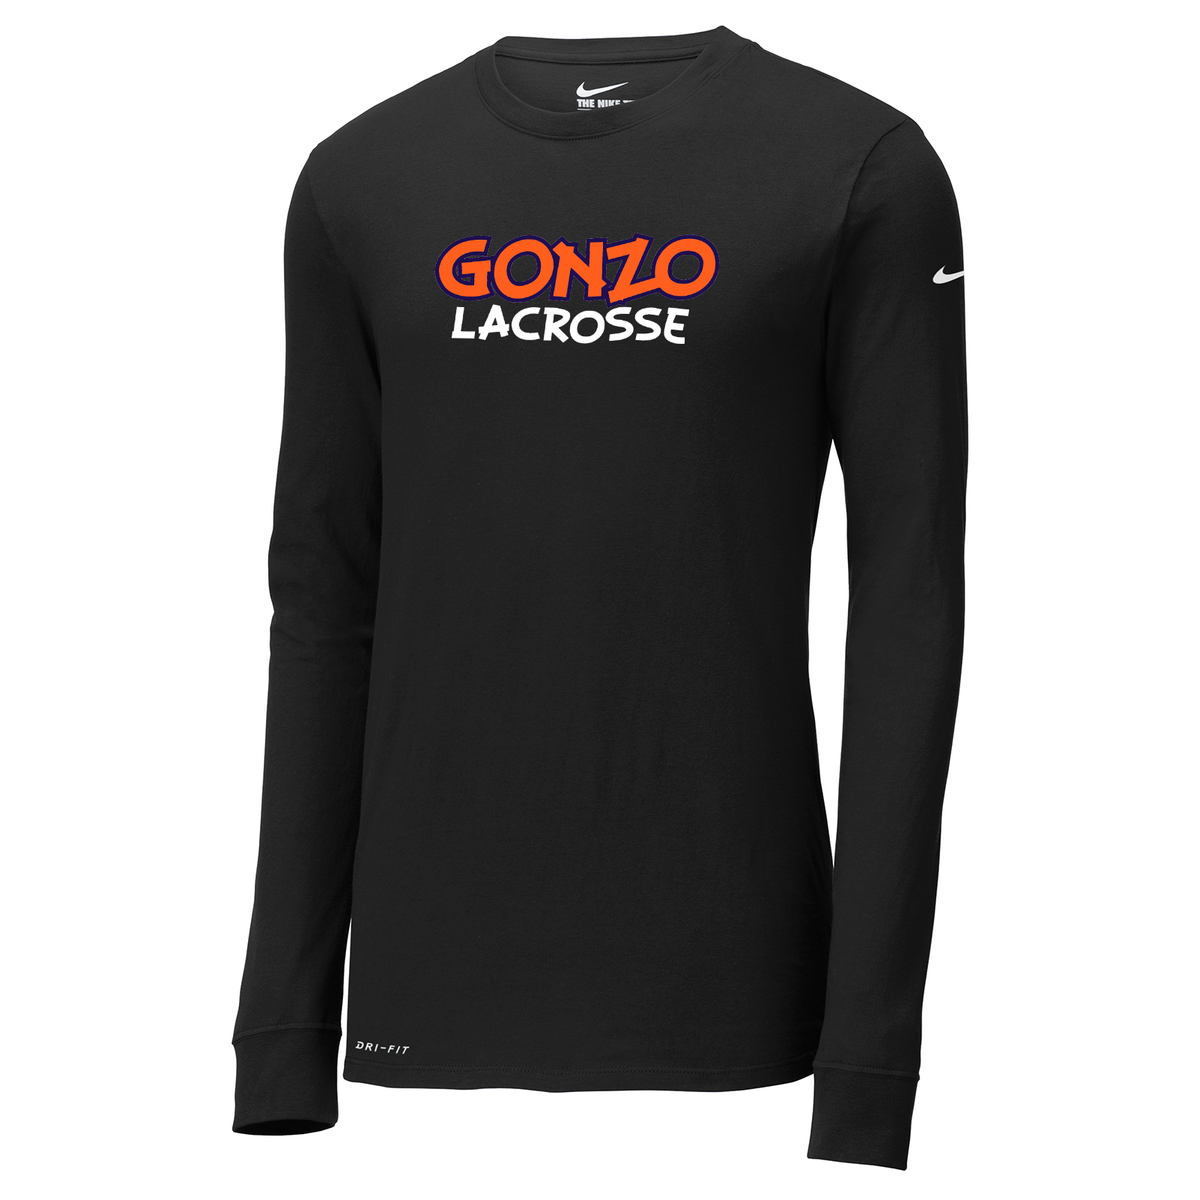 Gonzo Lacrosse Nike Dri-FIT Long Sleeve Tee